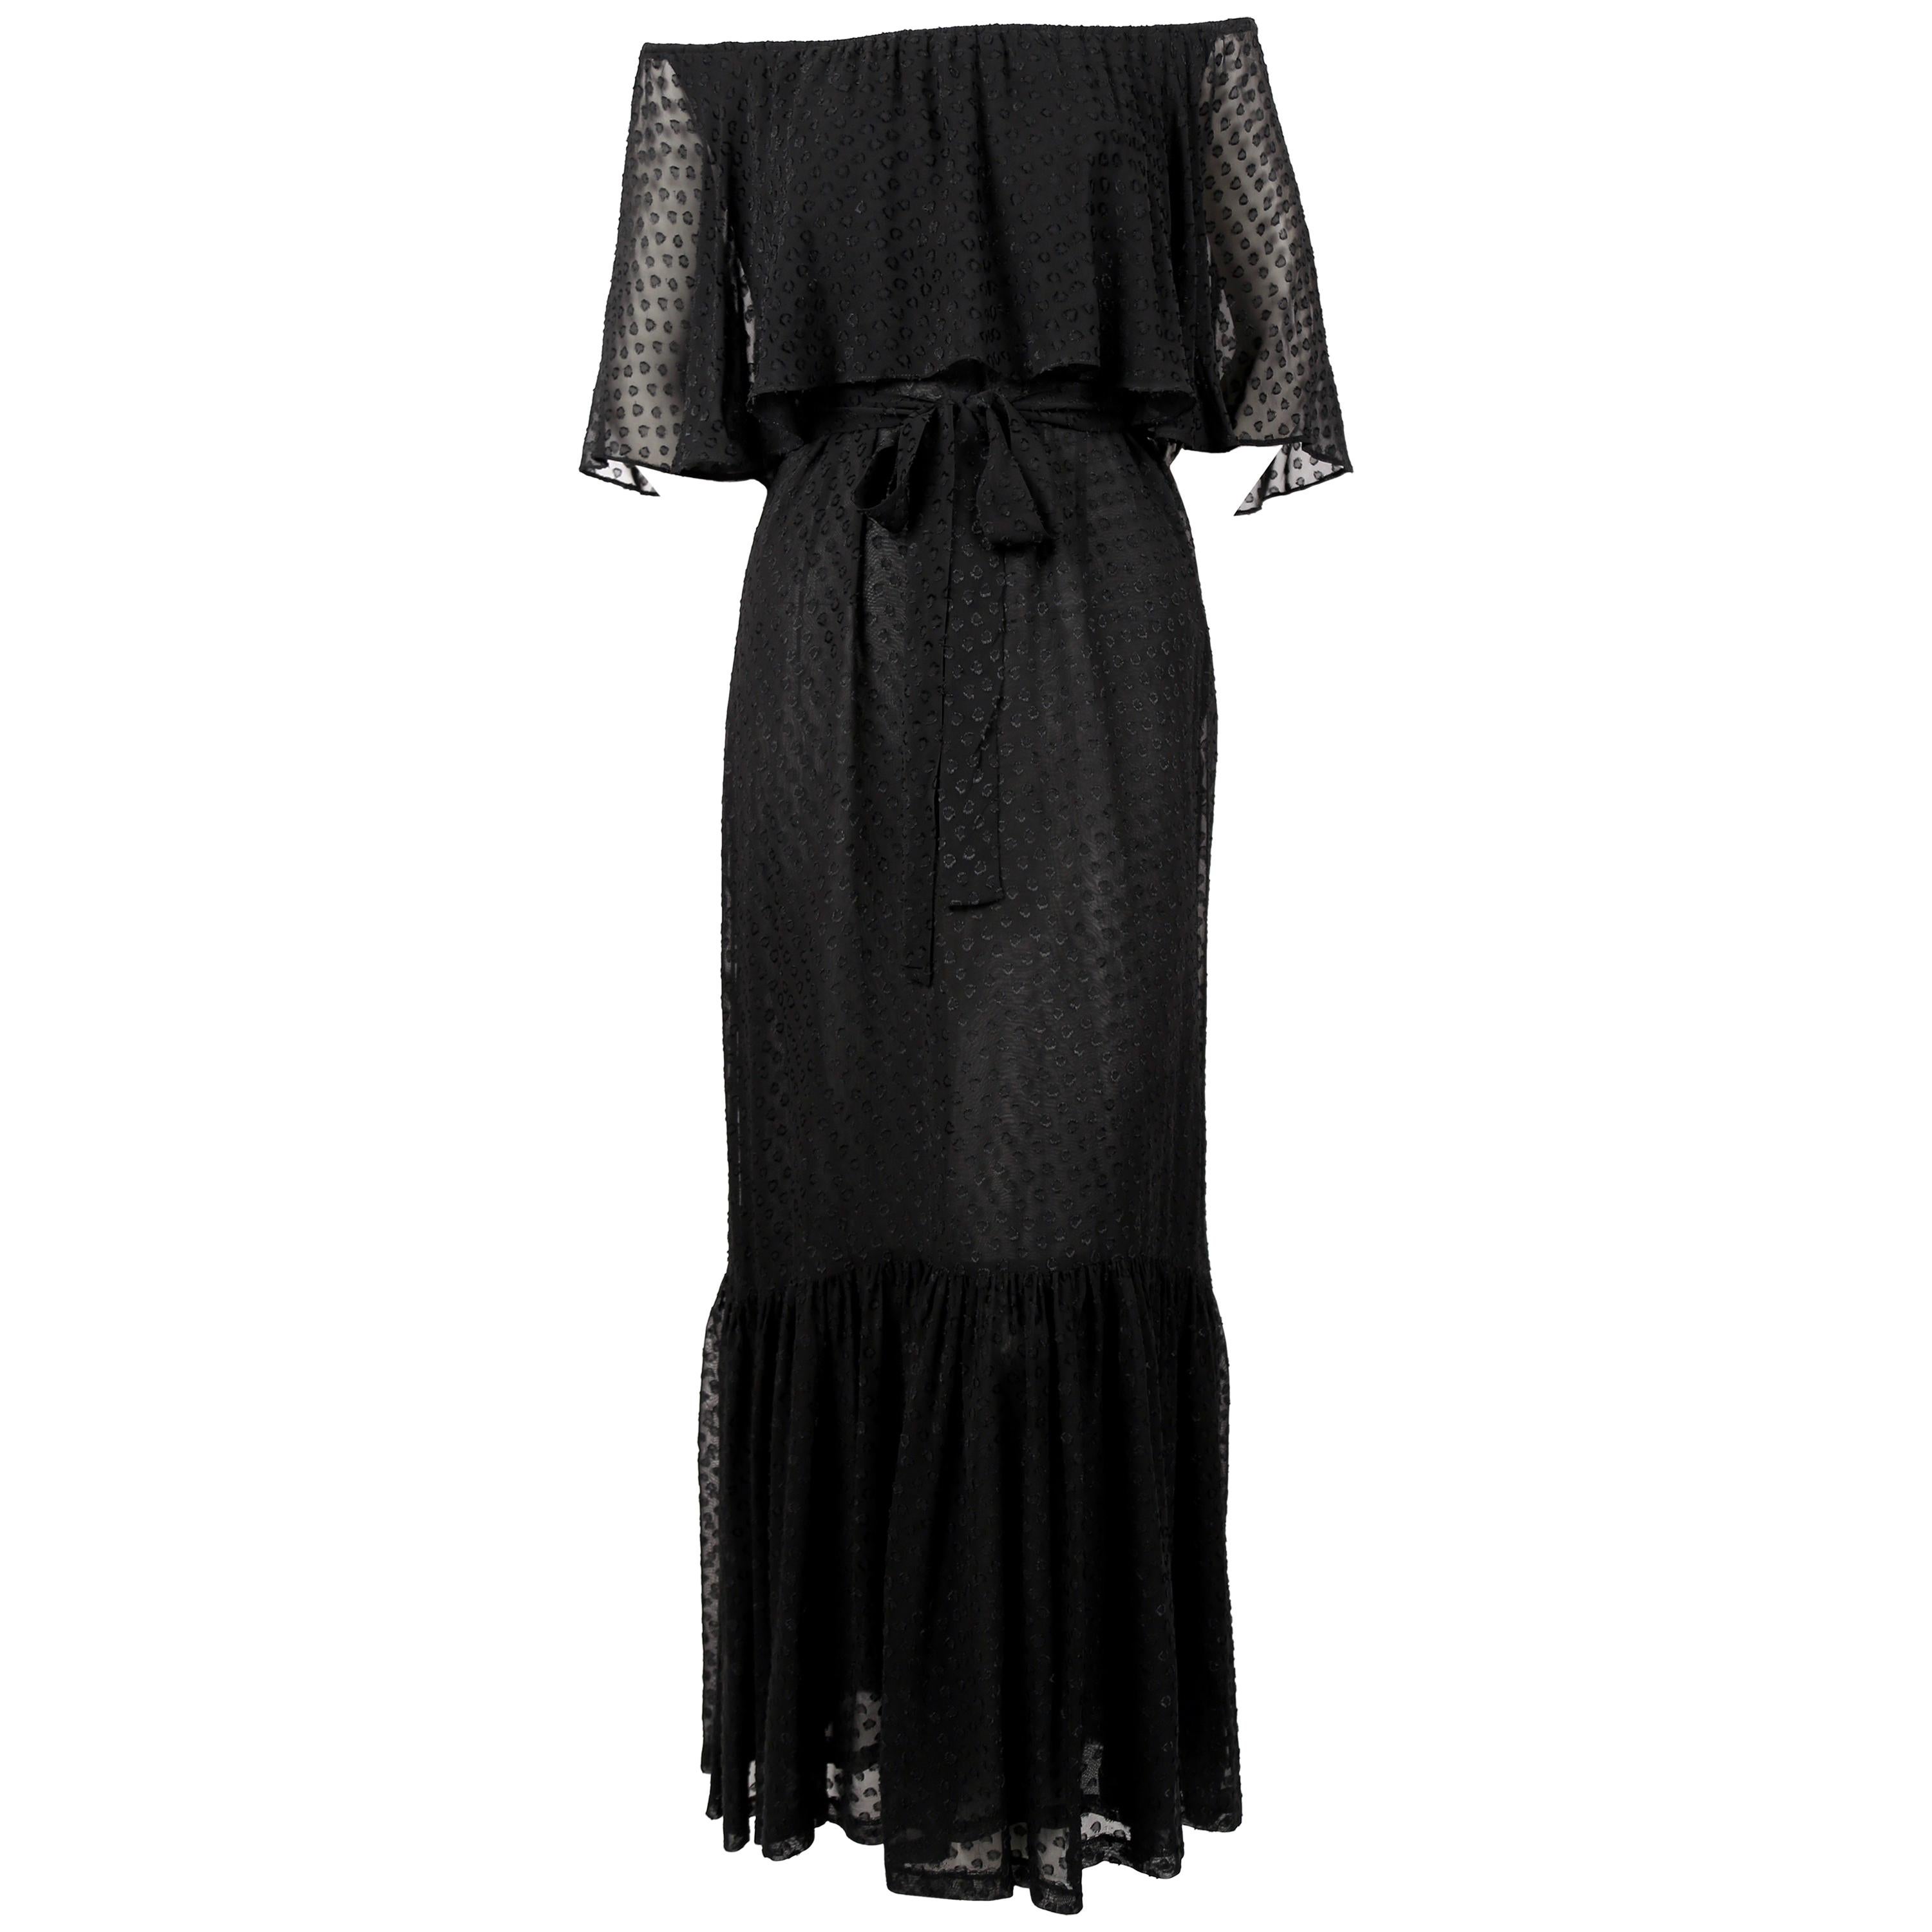 Yves Saint Laurent black off-the-shoulder peasant dress, 1970s